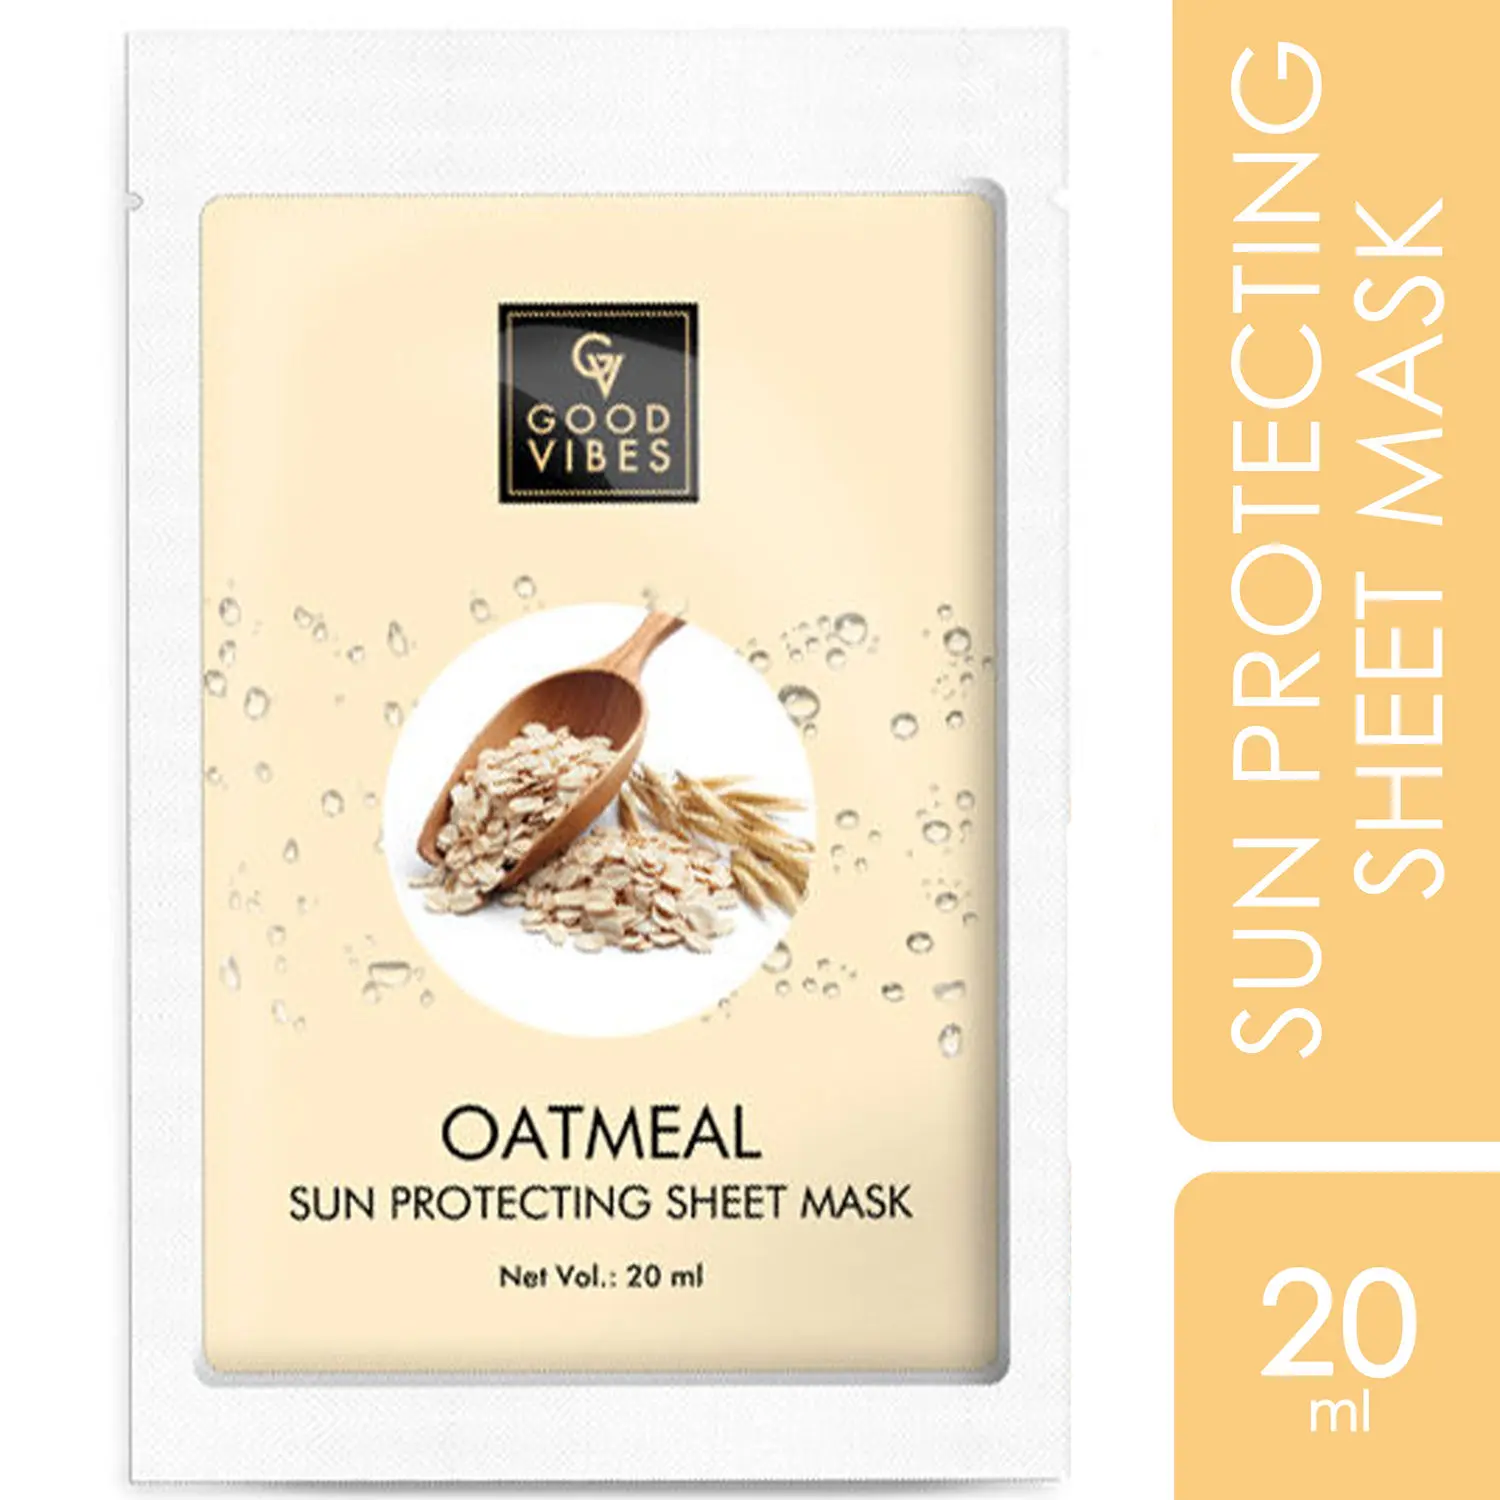 Good Vibes Sun Protecting Sheet Mask - Oatmeal (20 ml)